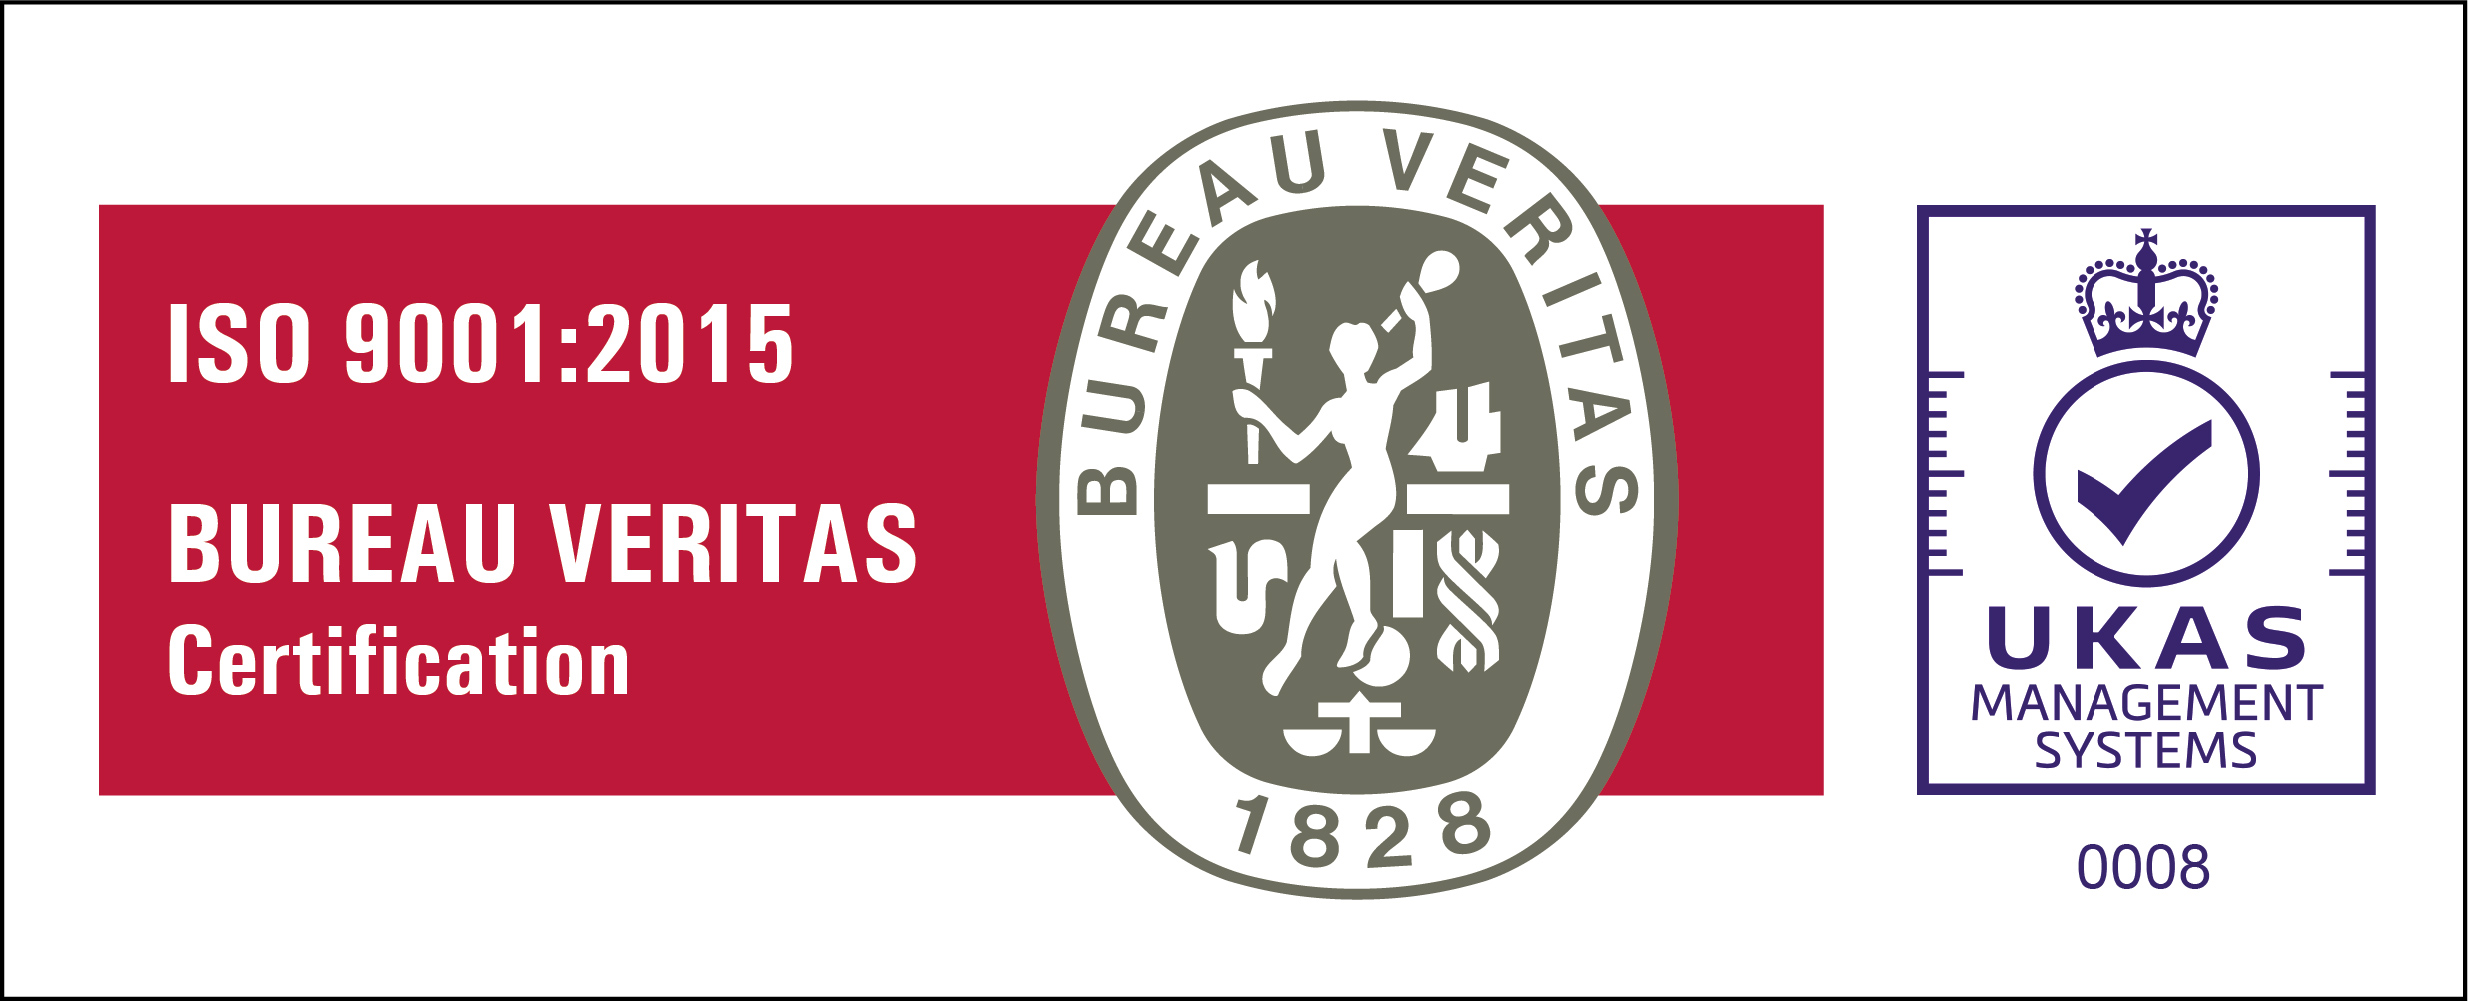 Bureau Veritas ISO 9001:2015 certification banner with UKAS logo.